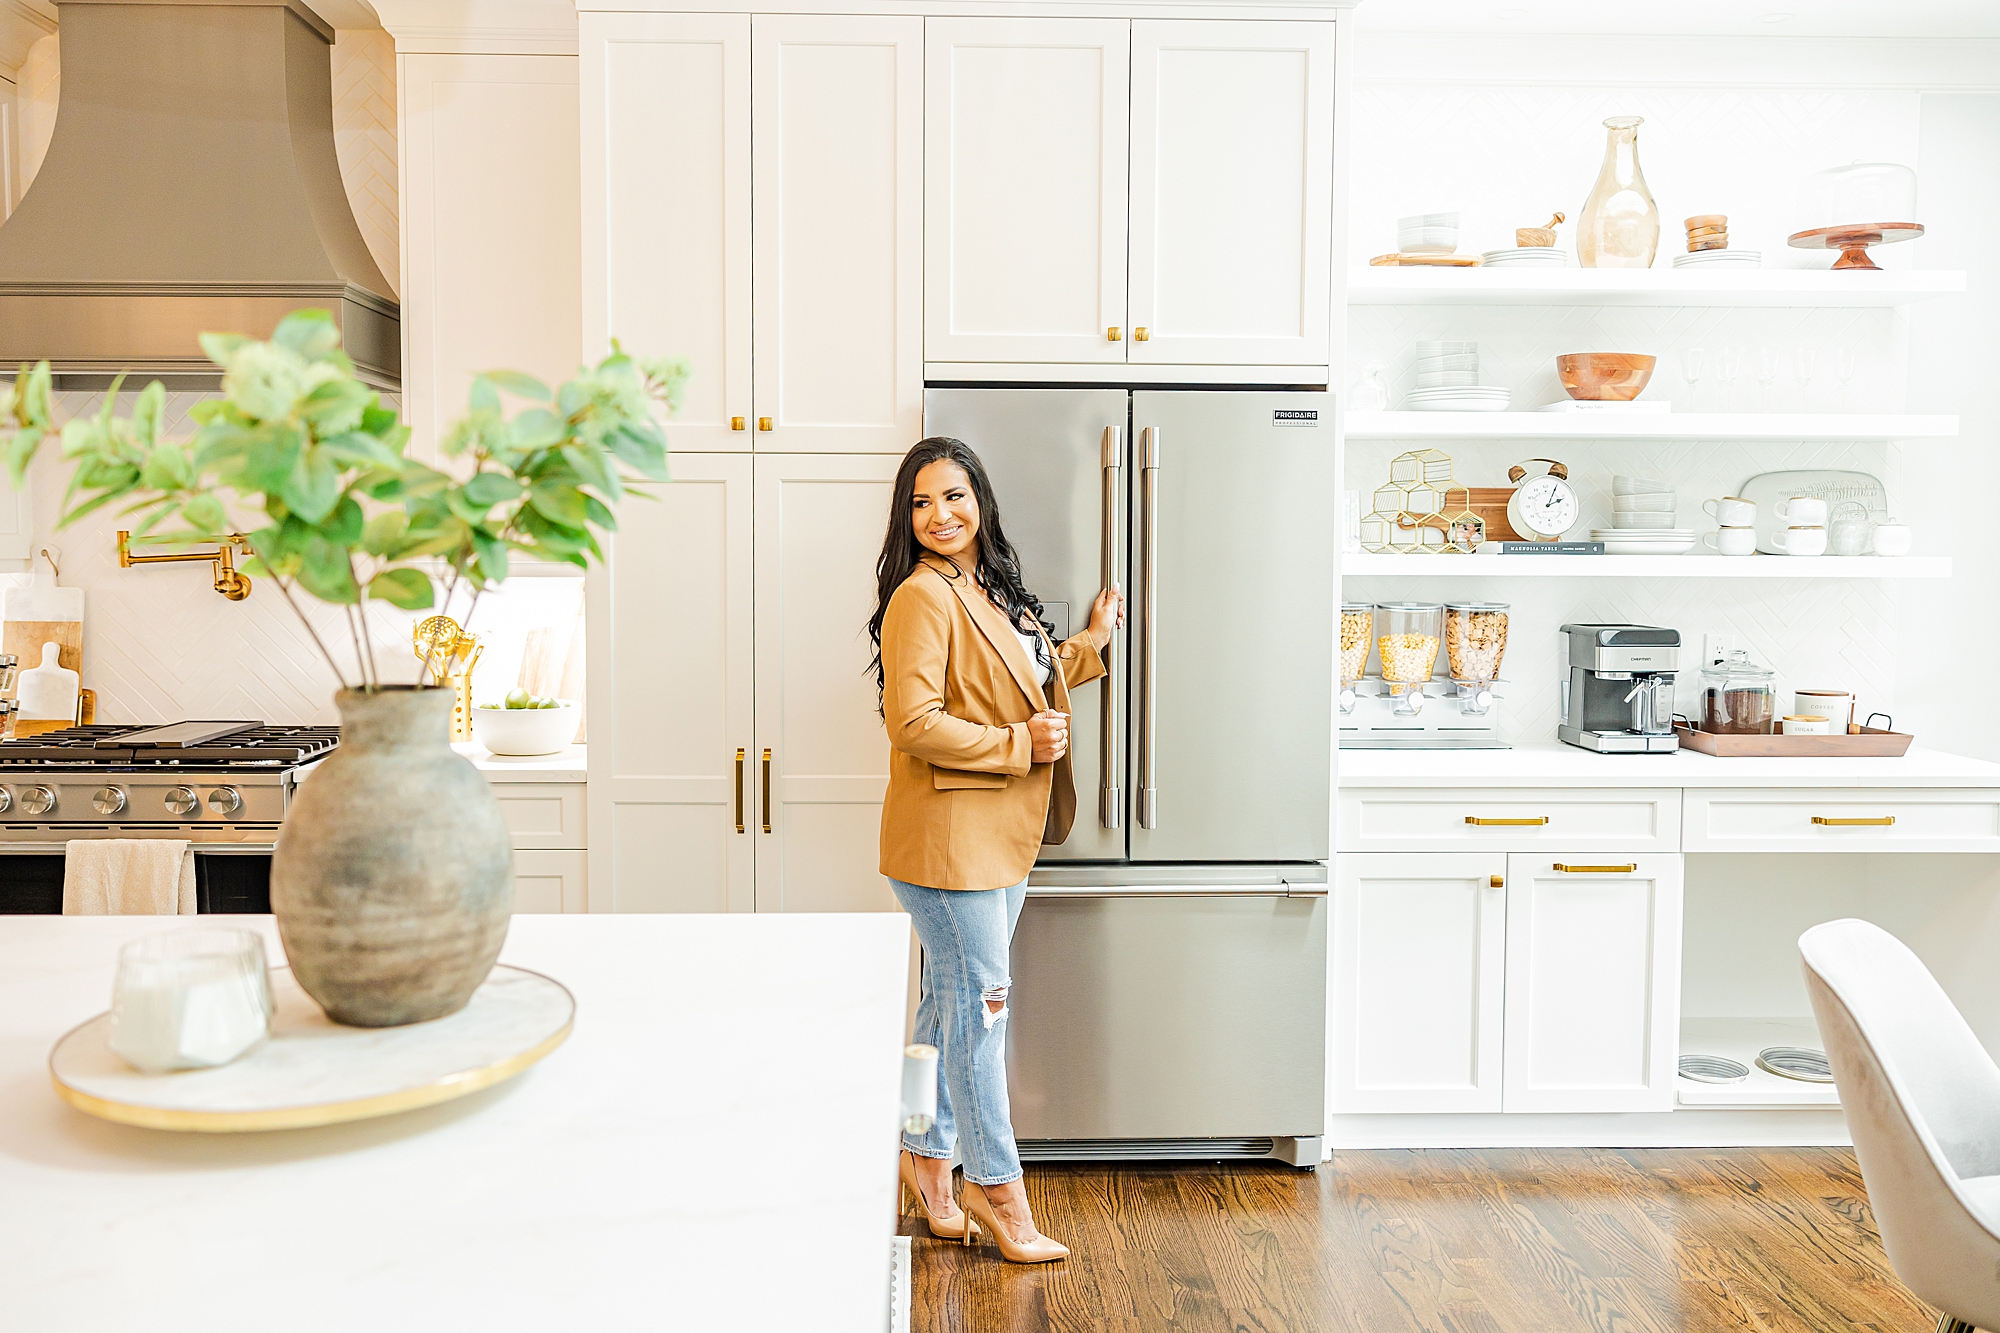 designer stands by new fridge in custom kitchen 